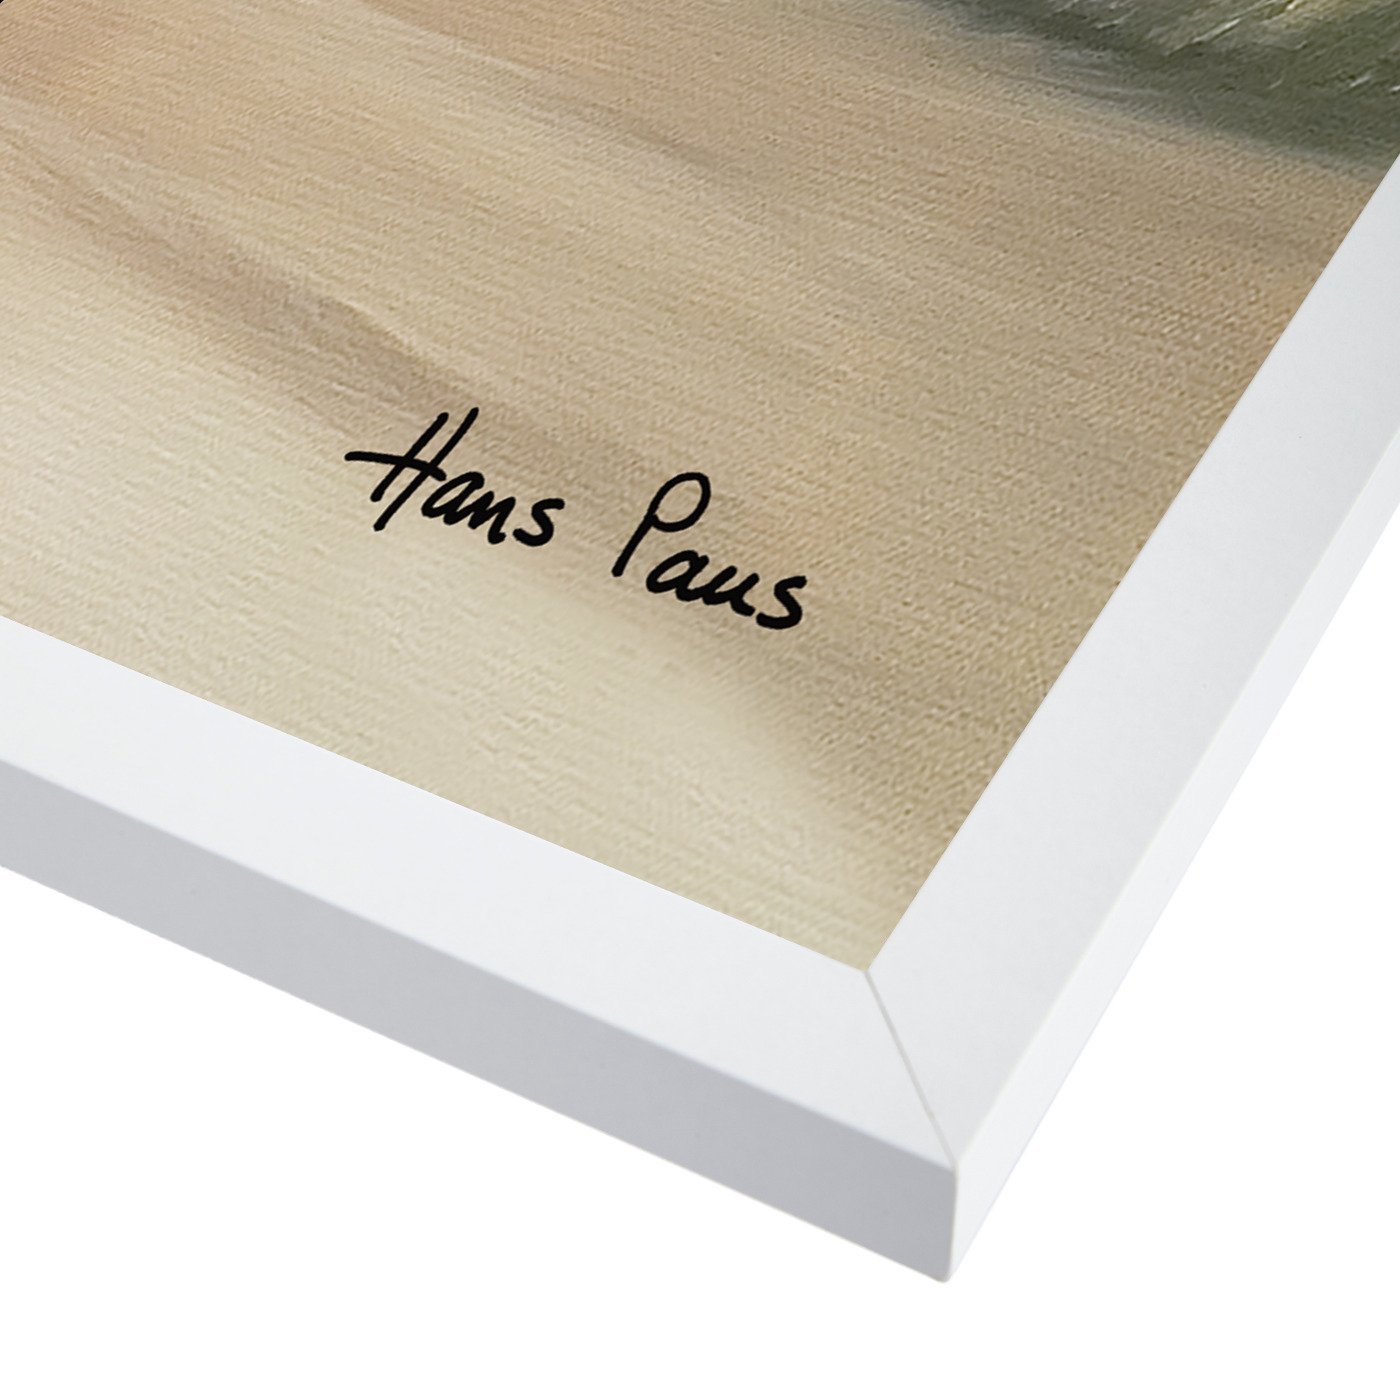 A Walk Along The Beach 7 By Hans Paus - Framed Print - Americanflat